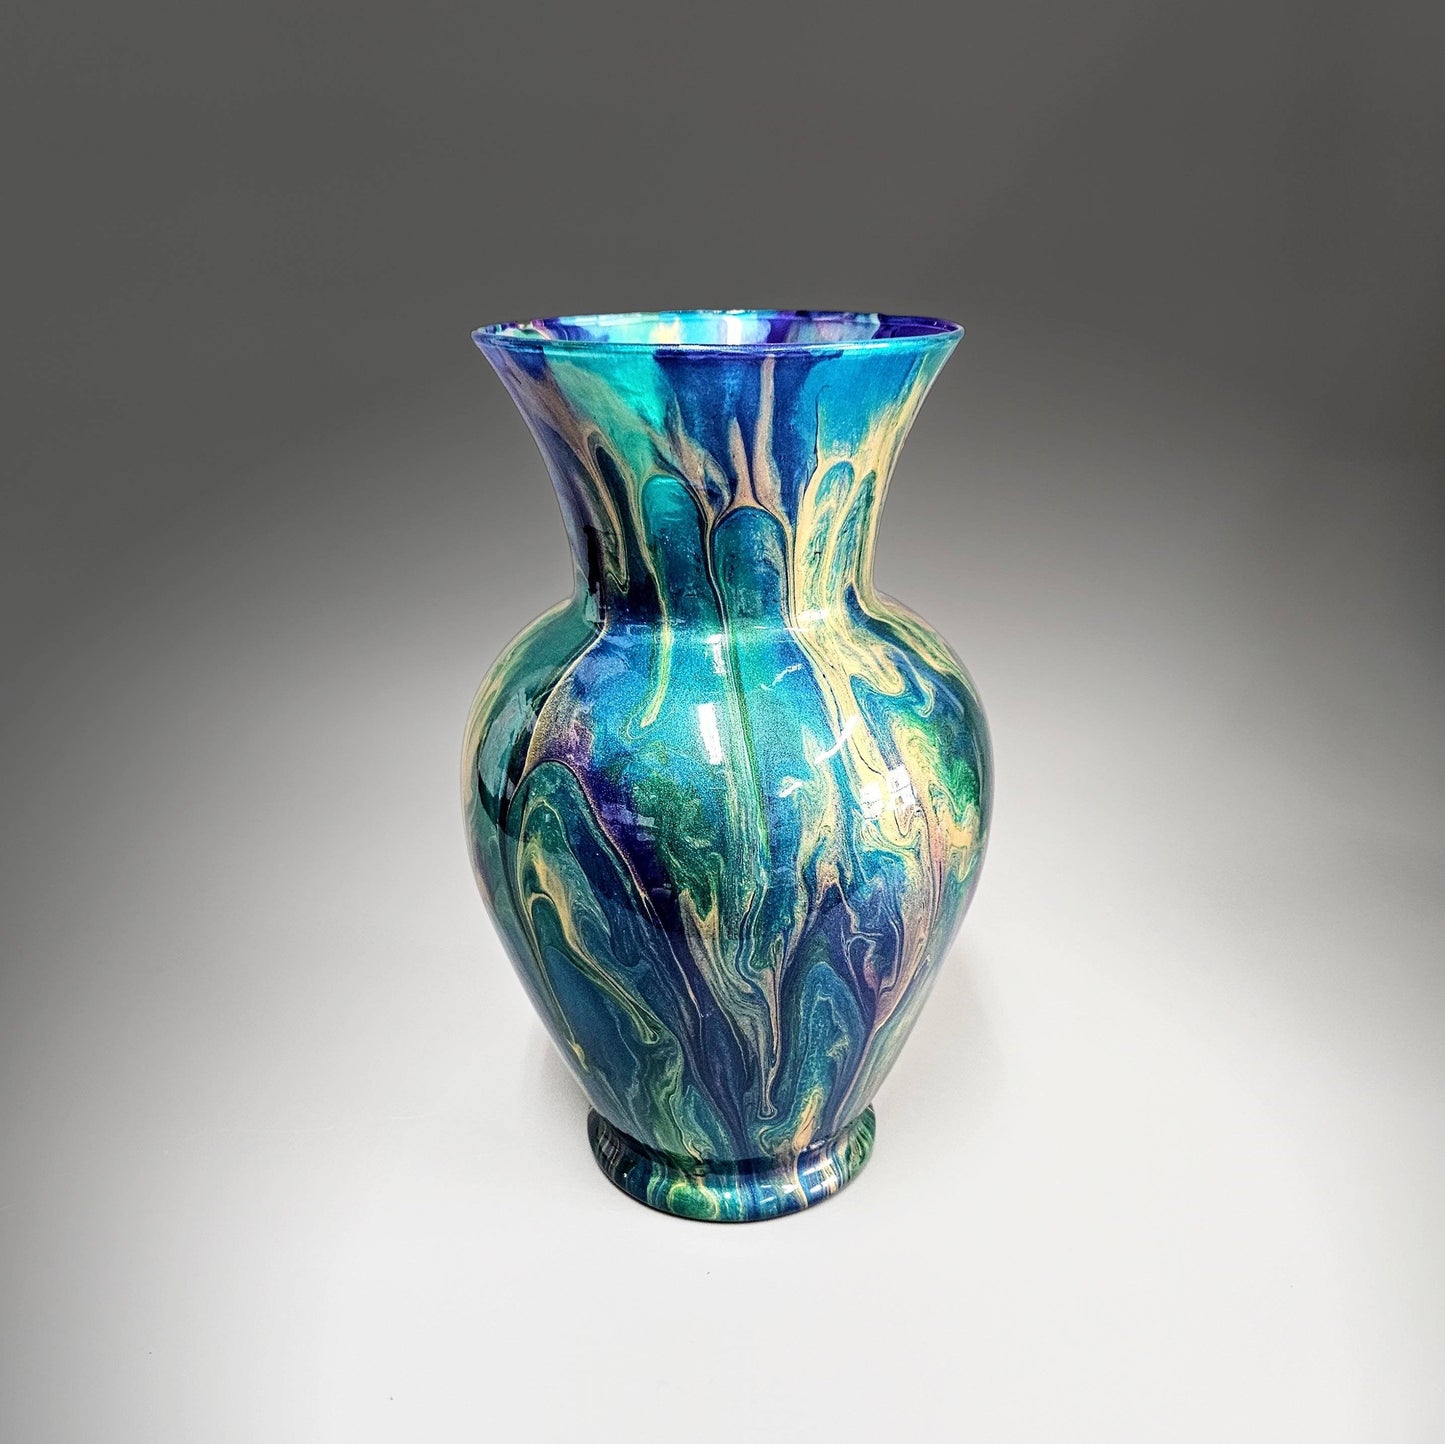 Peacock Feather Painted Centerpiece Vase | Modern Fluid Art Gift Ideas